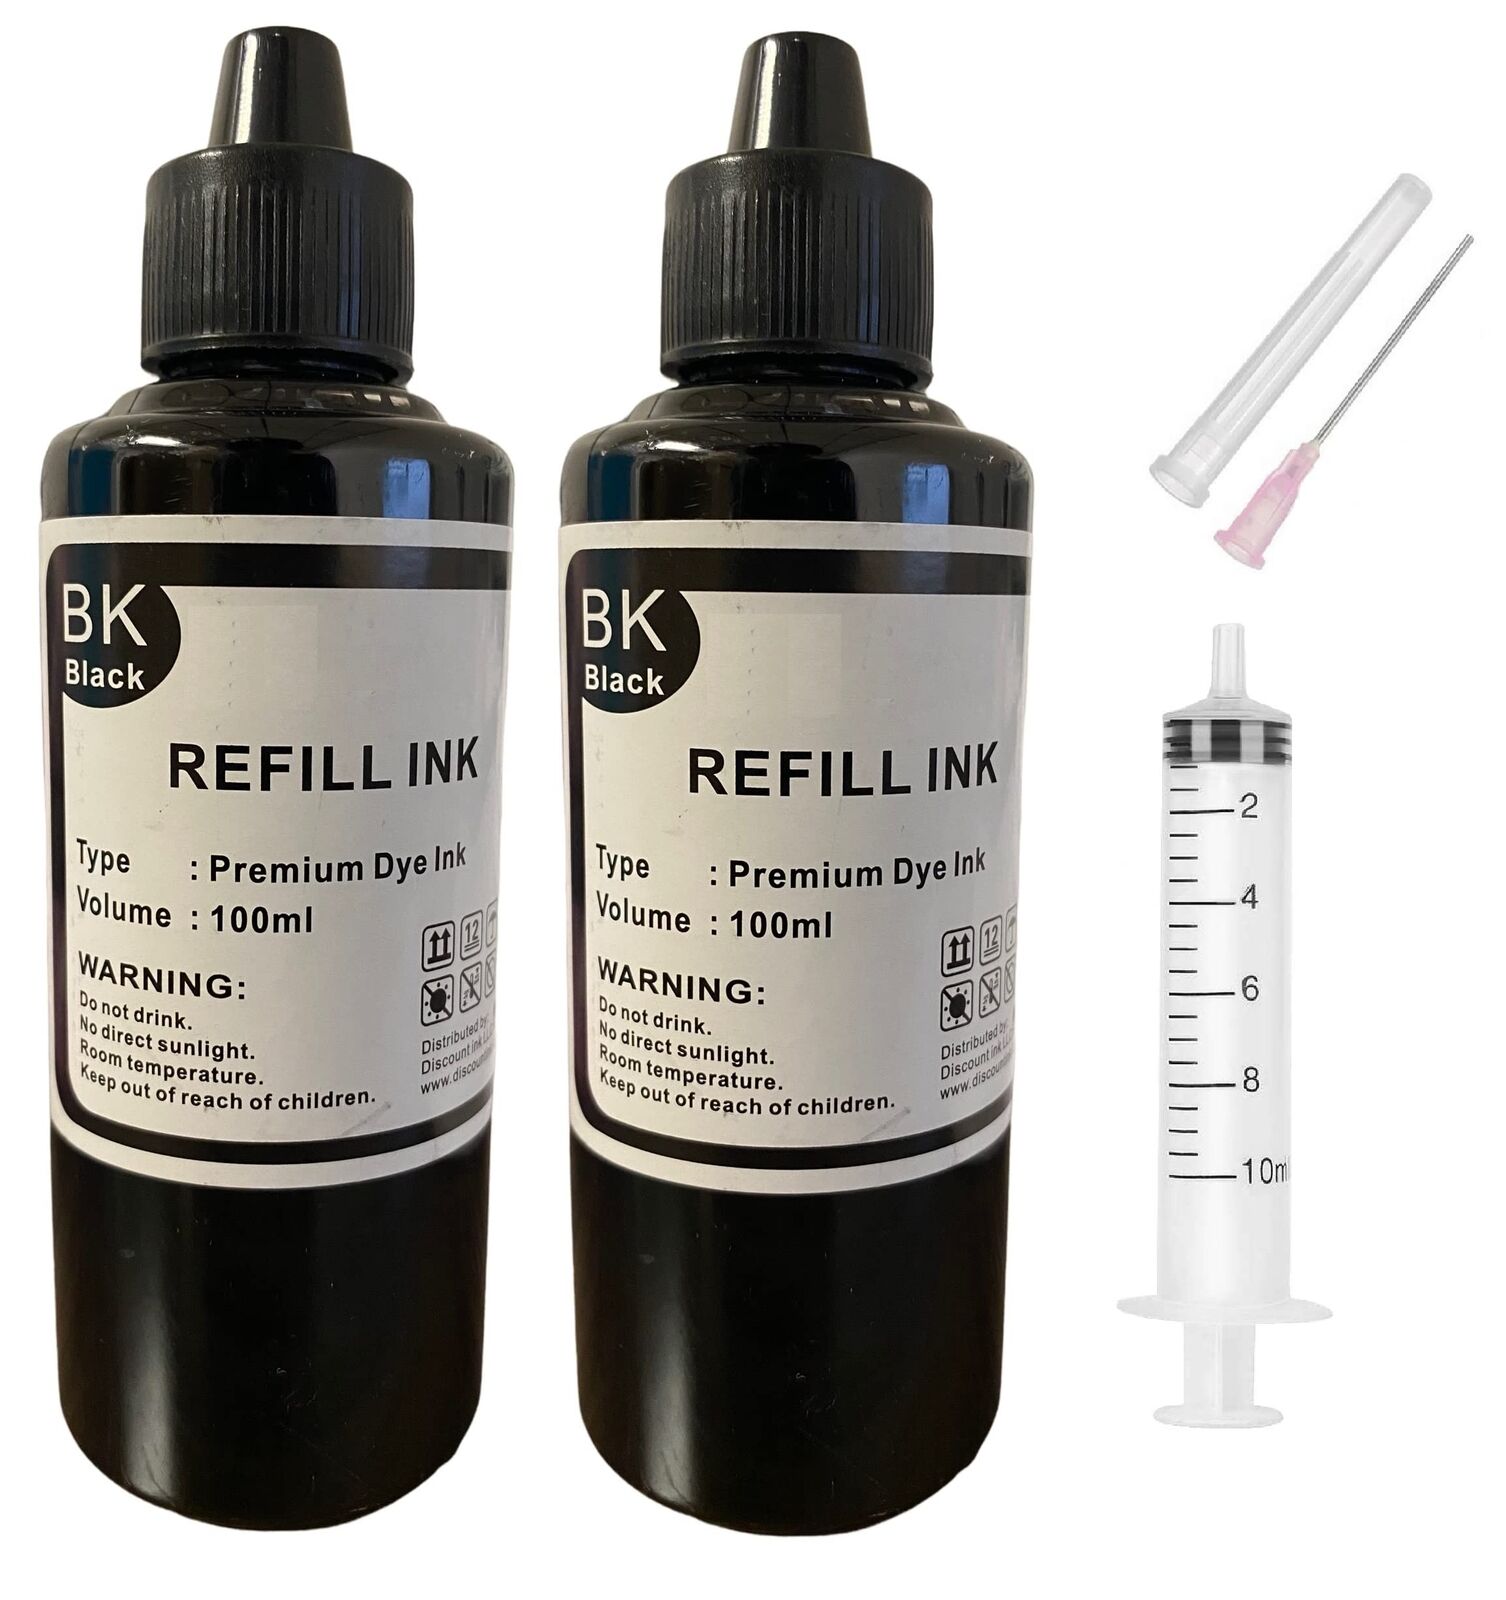 2-Pack 100ml Black dye Refill Ink Bottles, Universal, Premium Quality